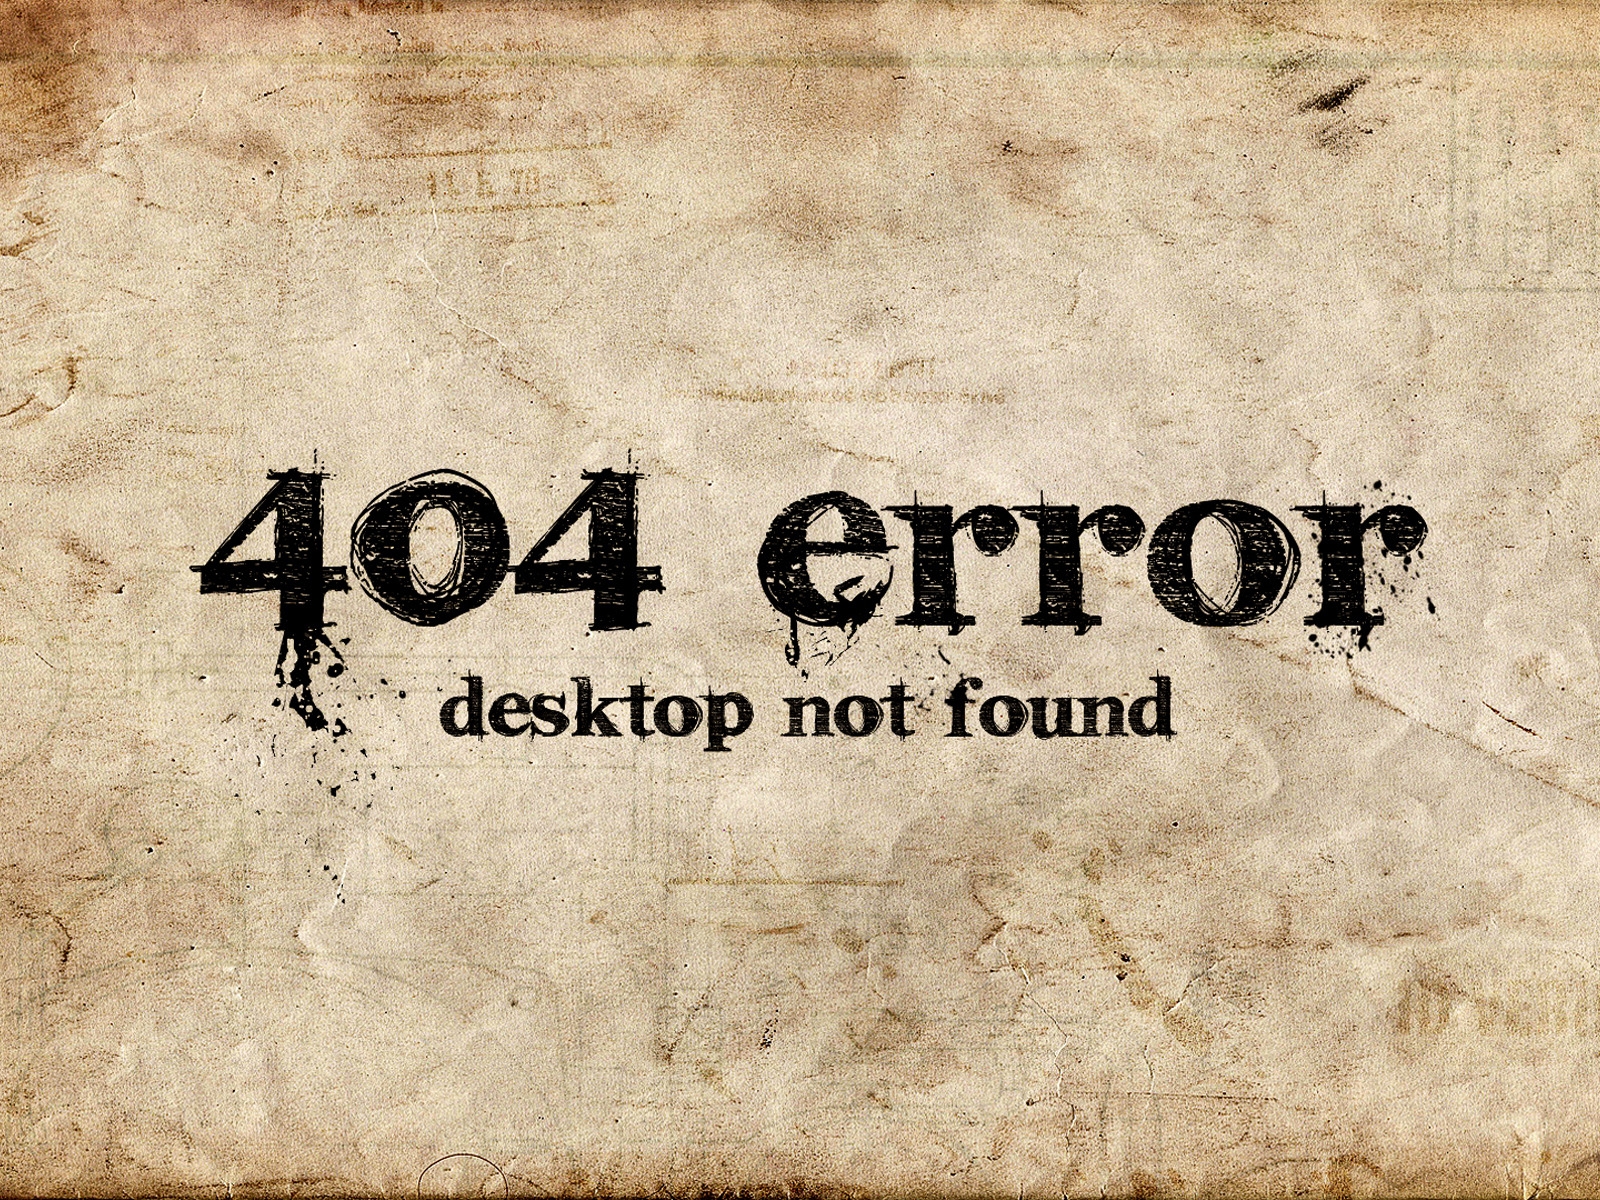 Error 404 for 1600 x 1200 resolution